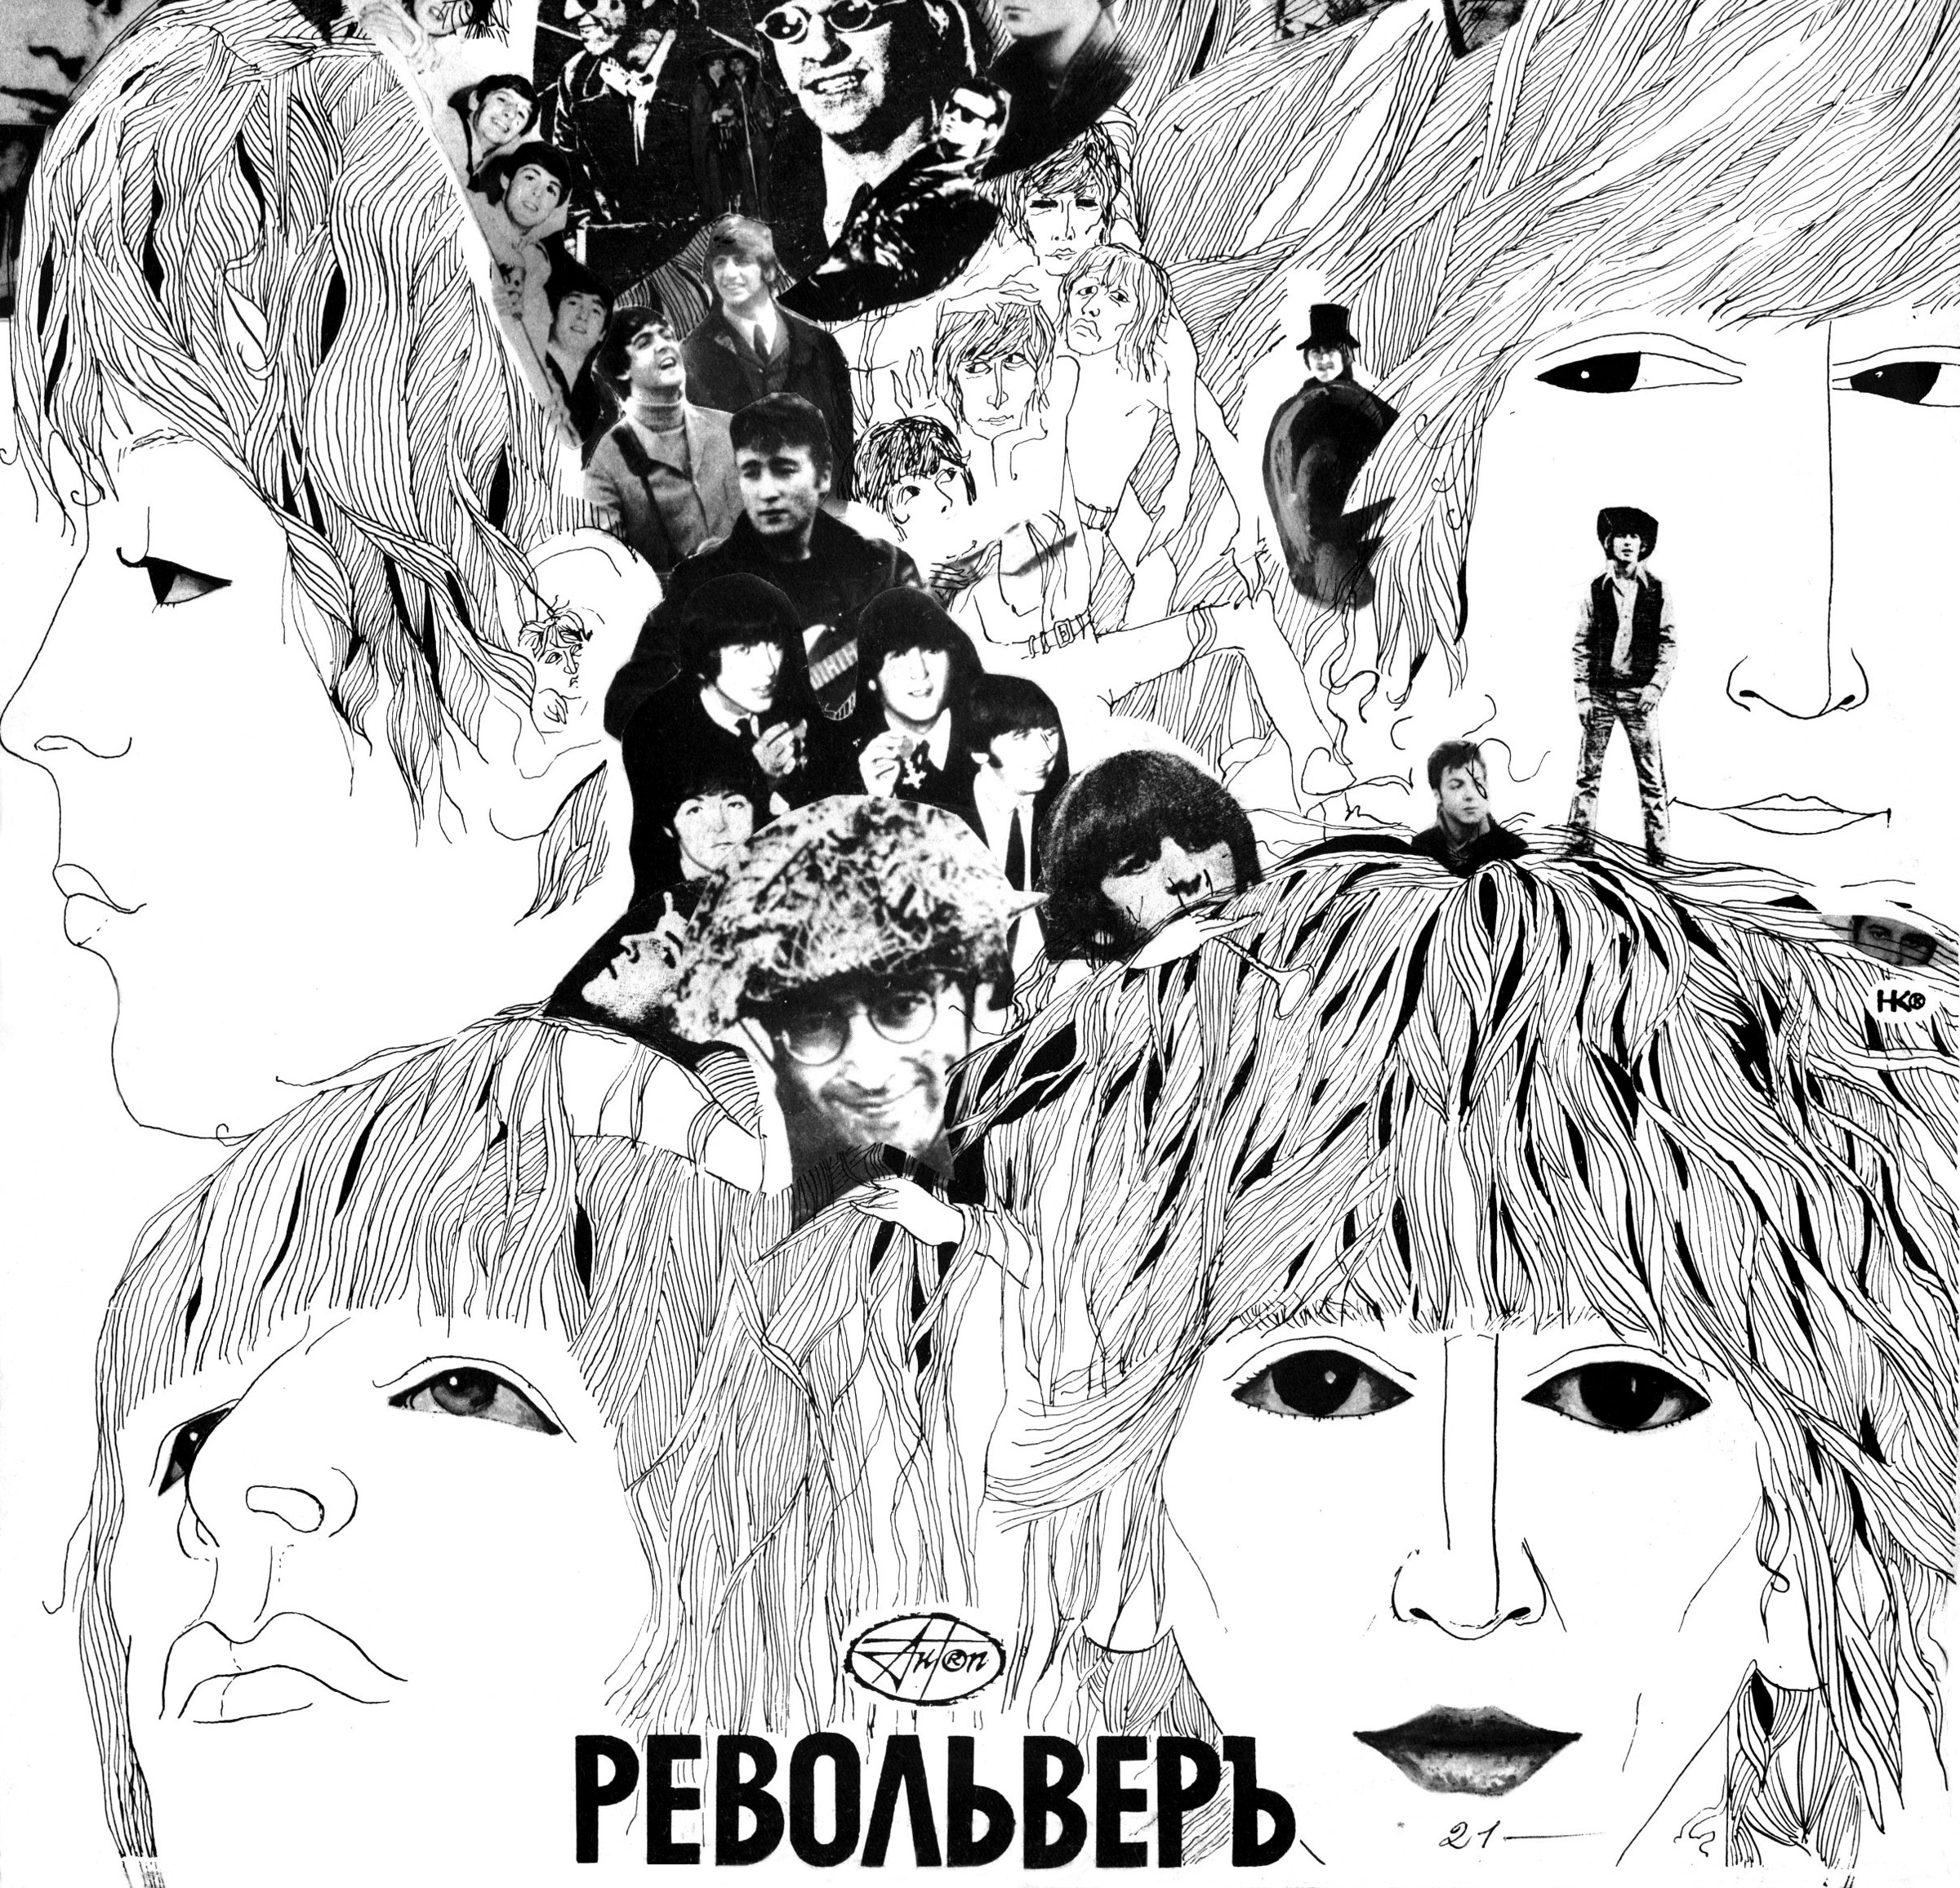 Russian Artwork For The Beatles Revolver Album The Beatles Bible